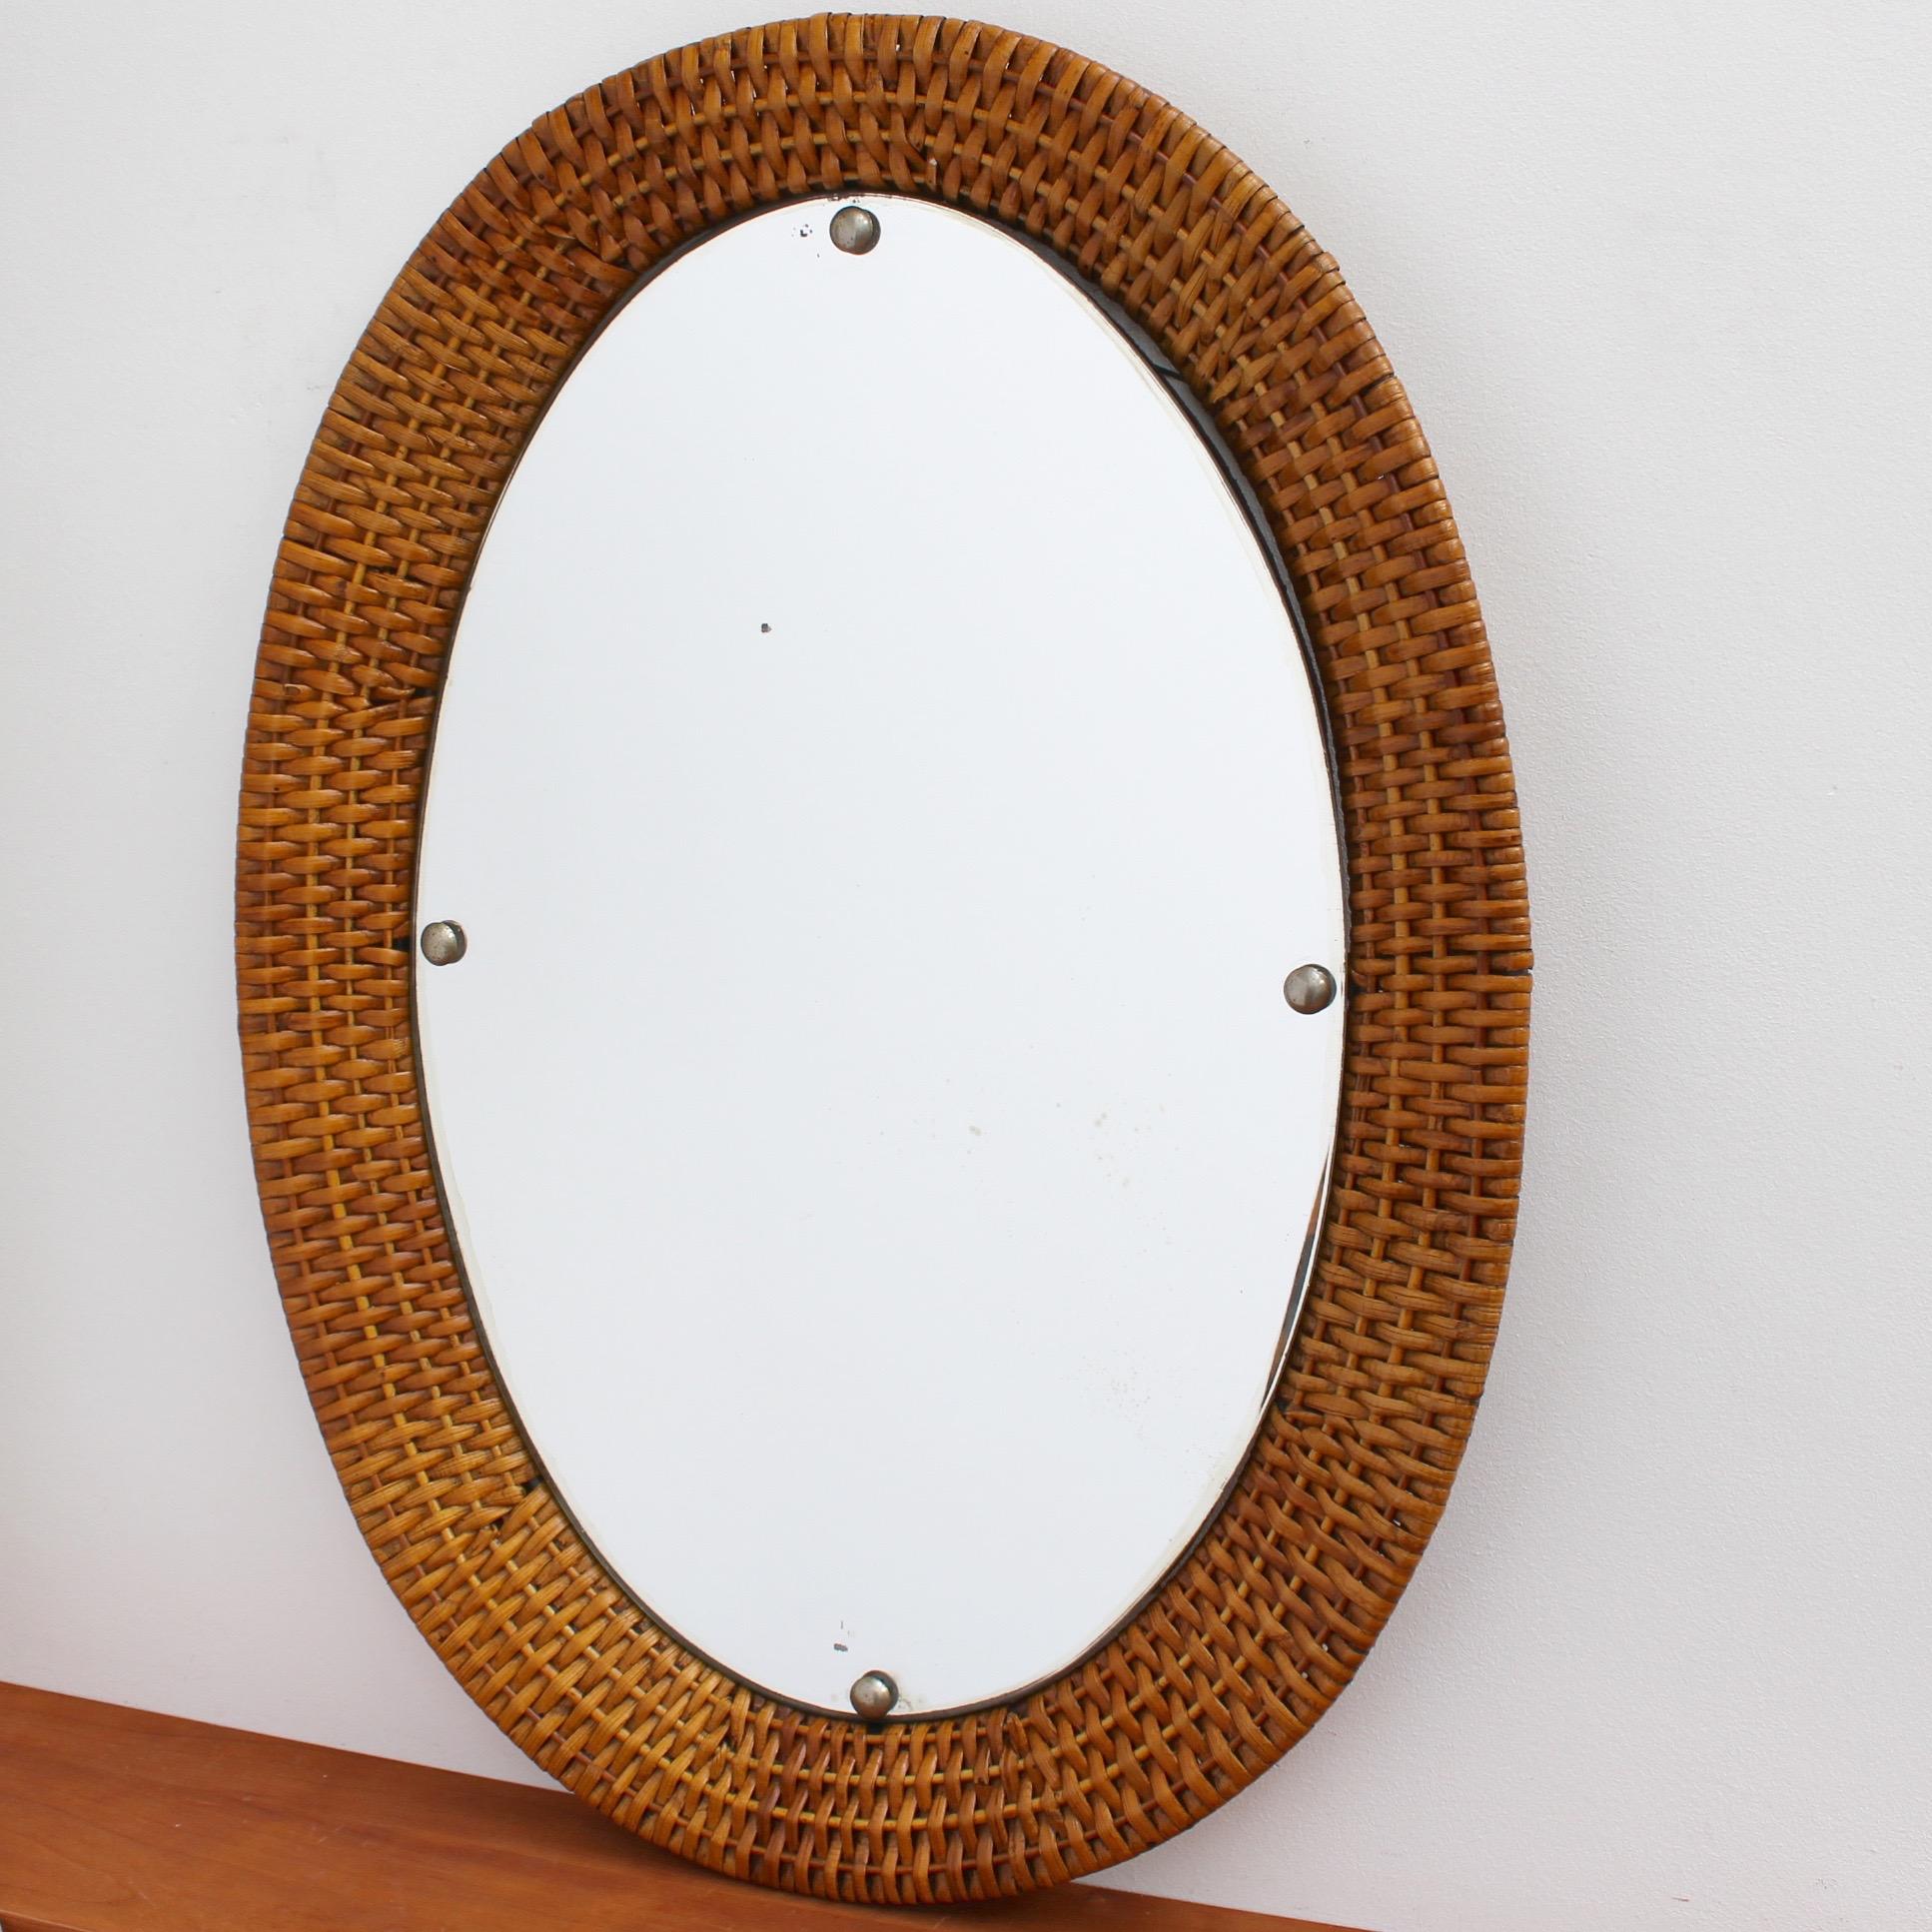 Mid-20th Century Italian Wicker Rattan Oval-Shaped Wall Mirror, circa 1960s